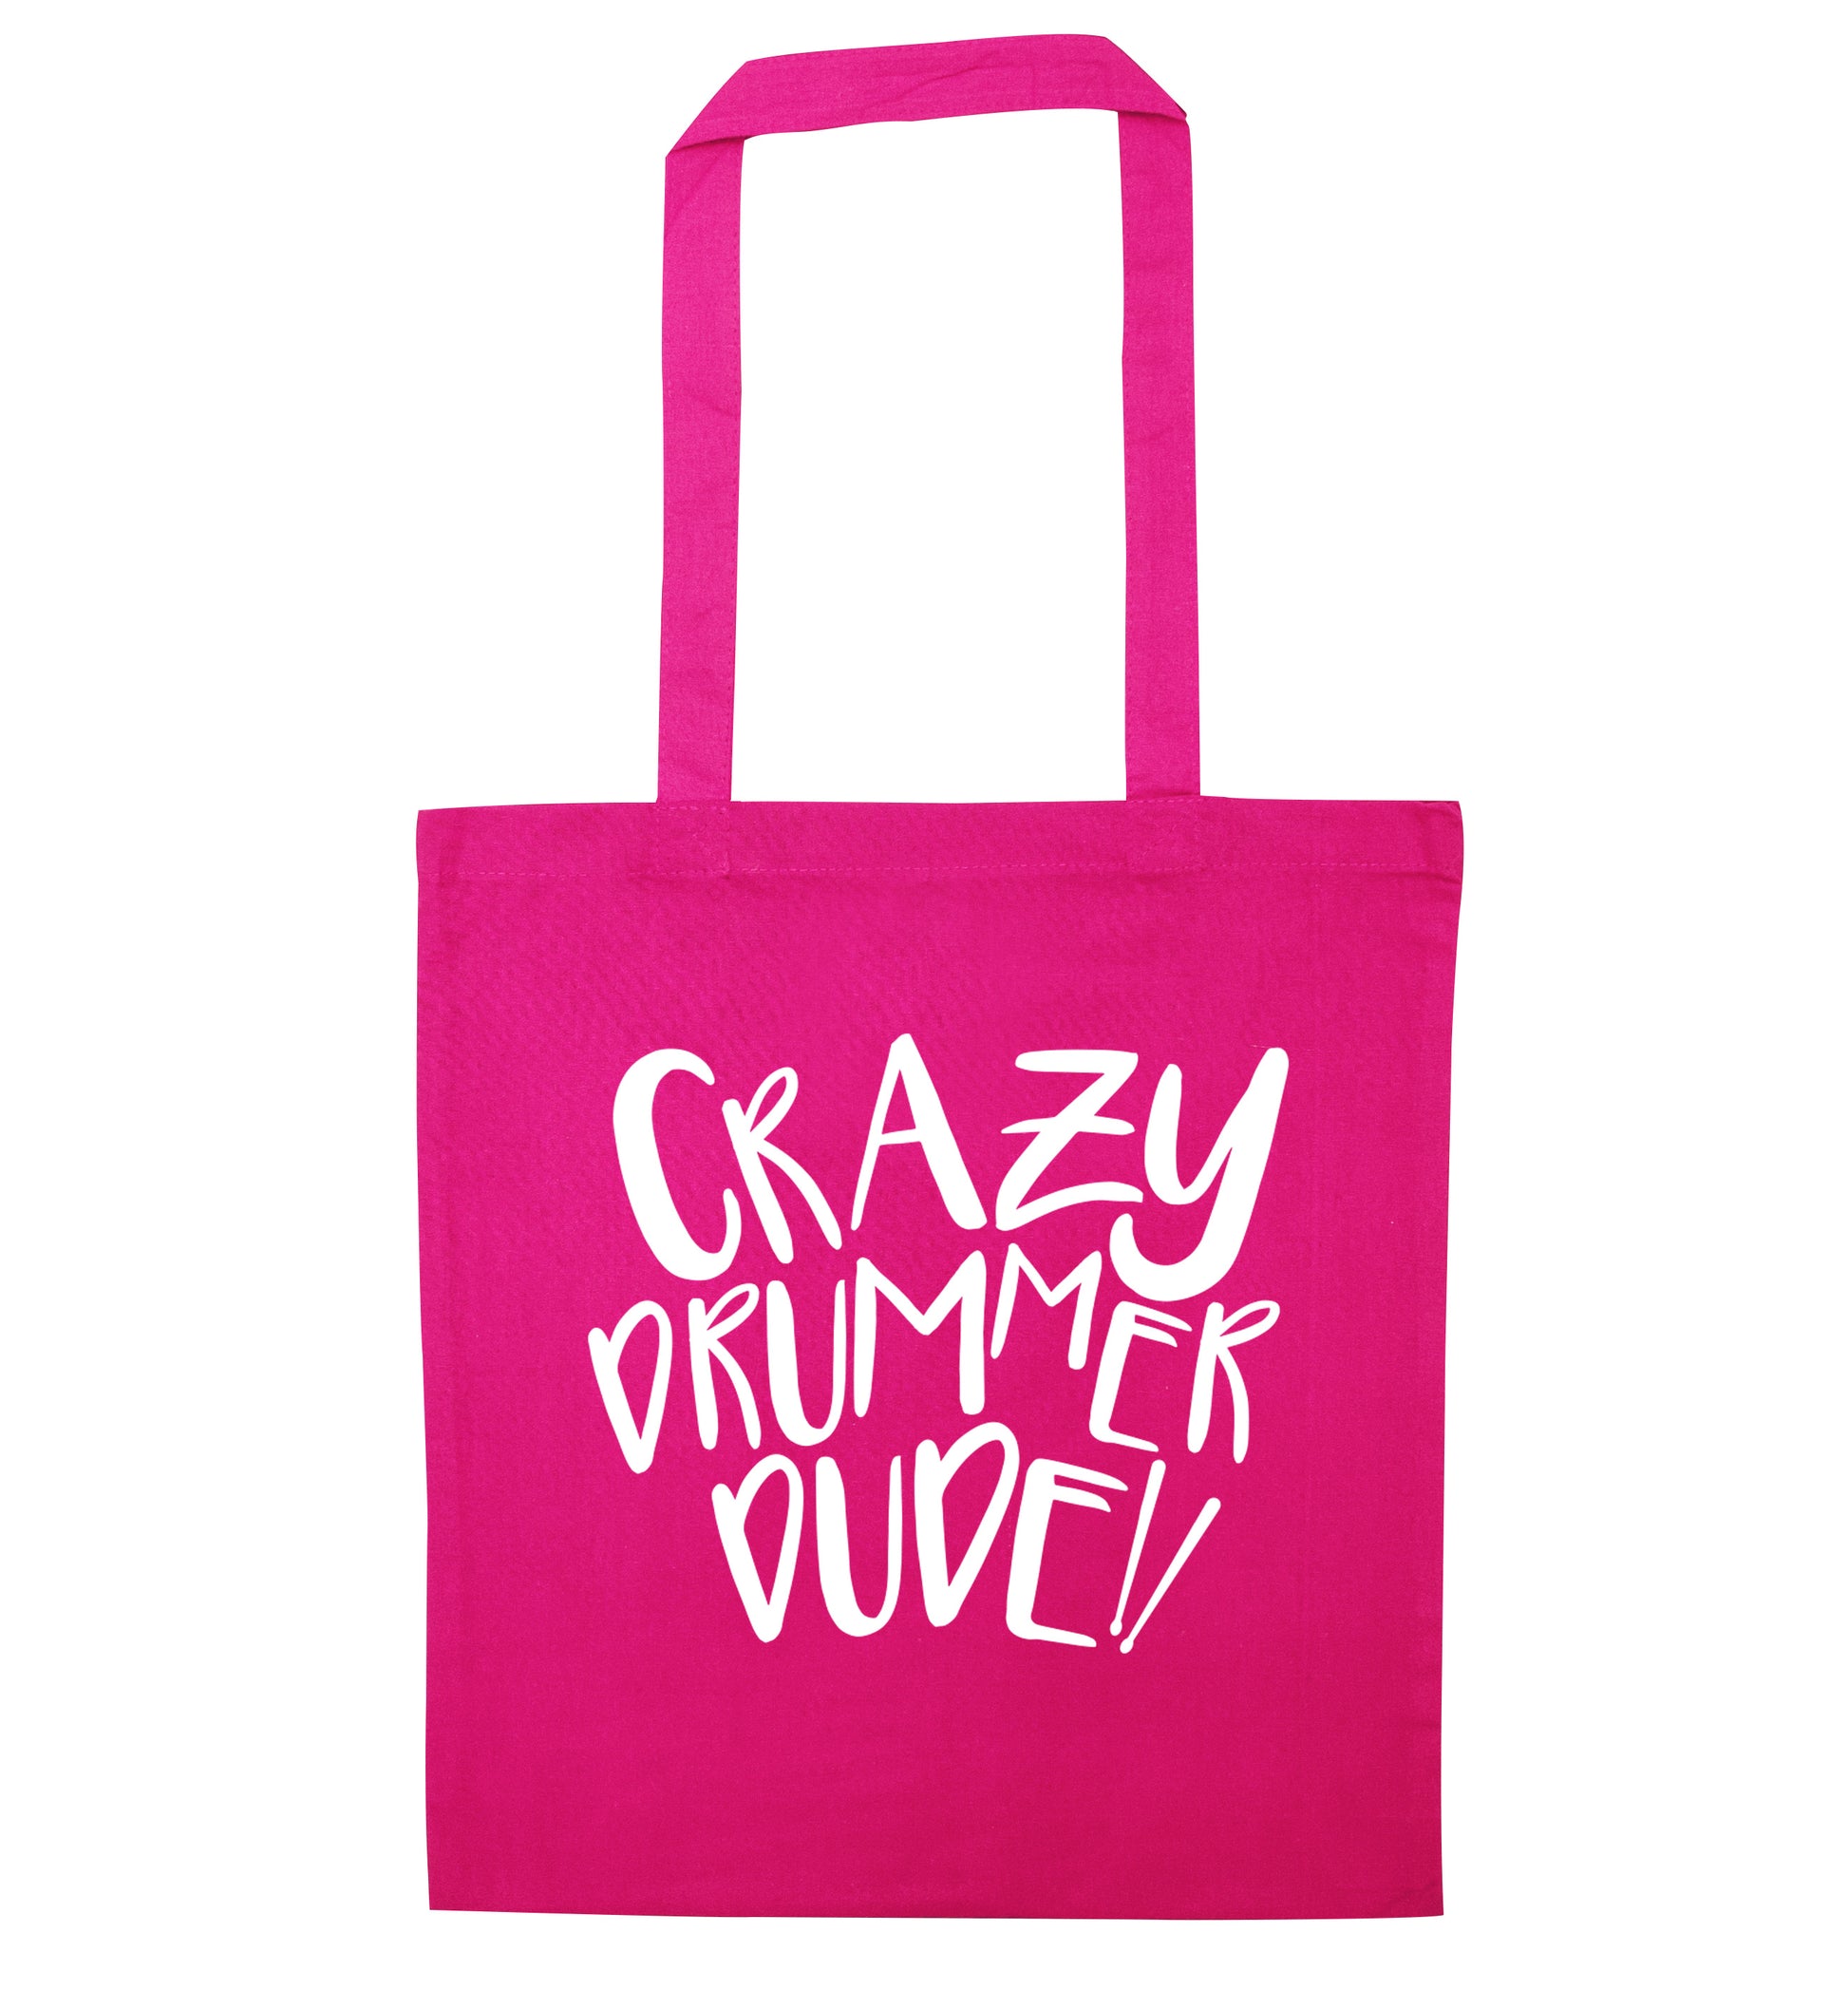 Crazy drummer dude pink tote bag